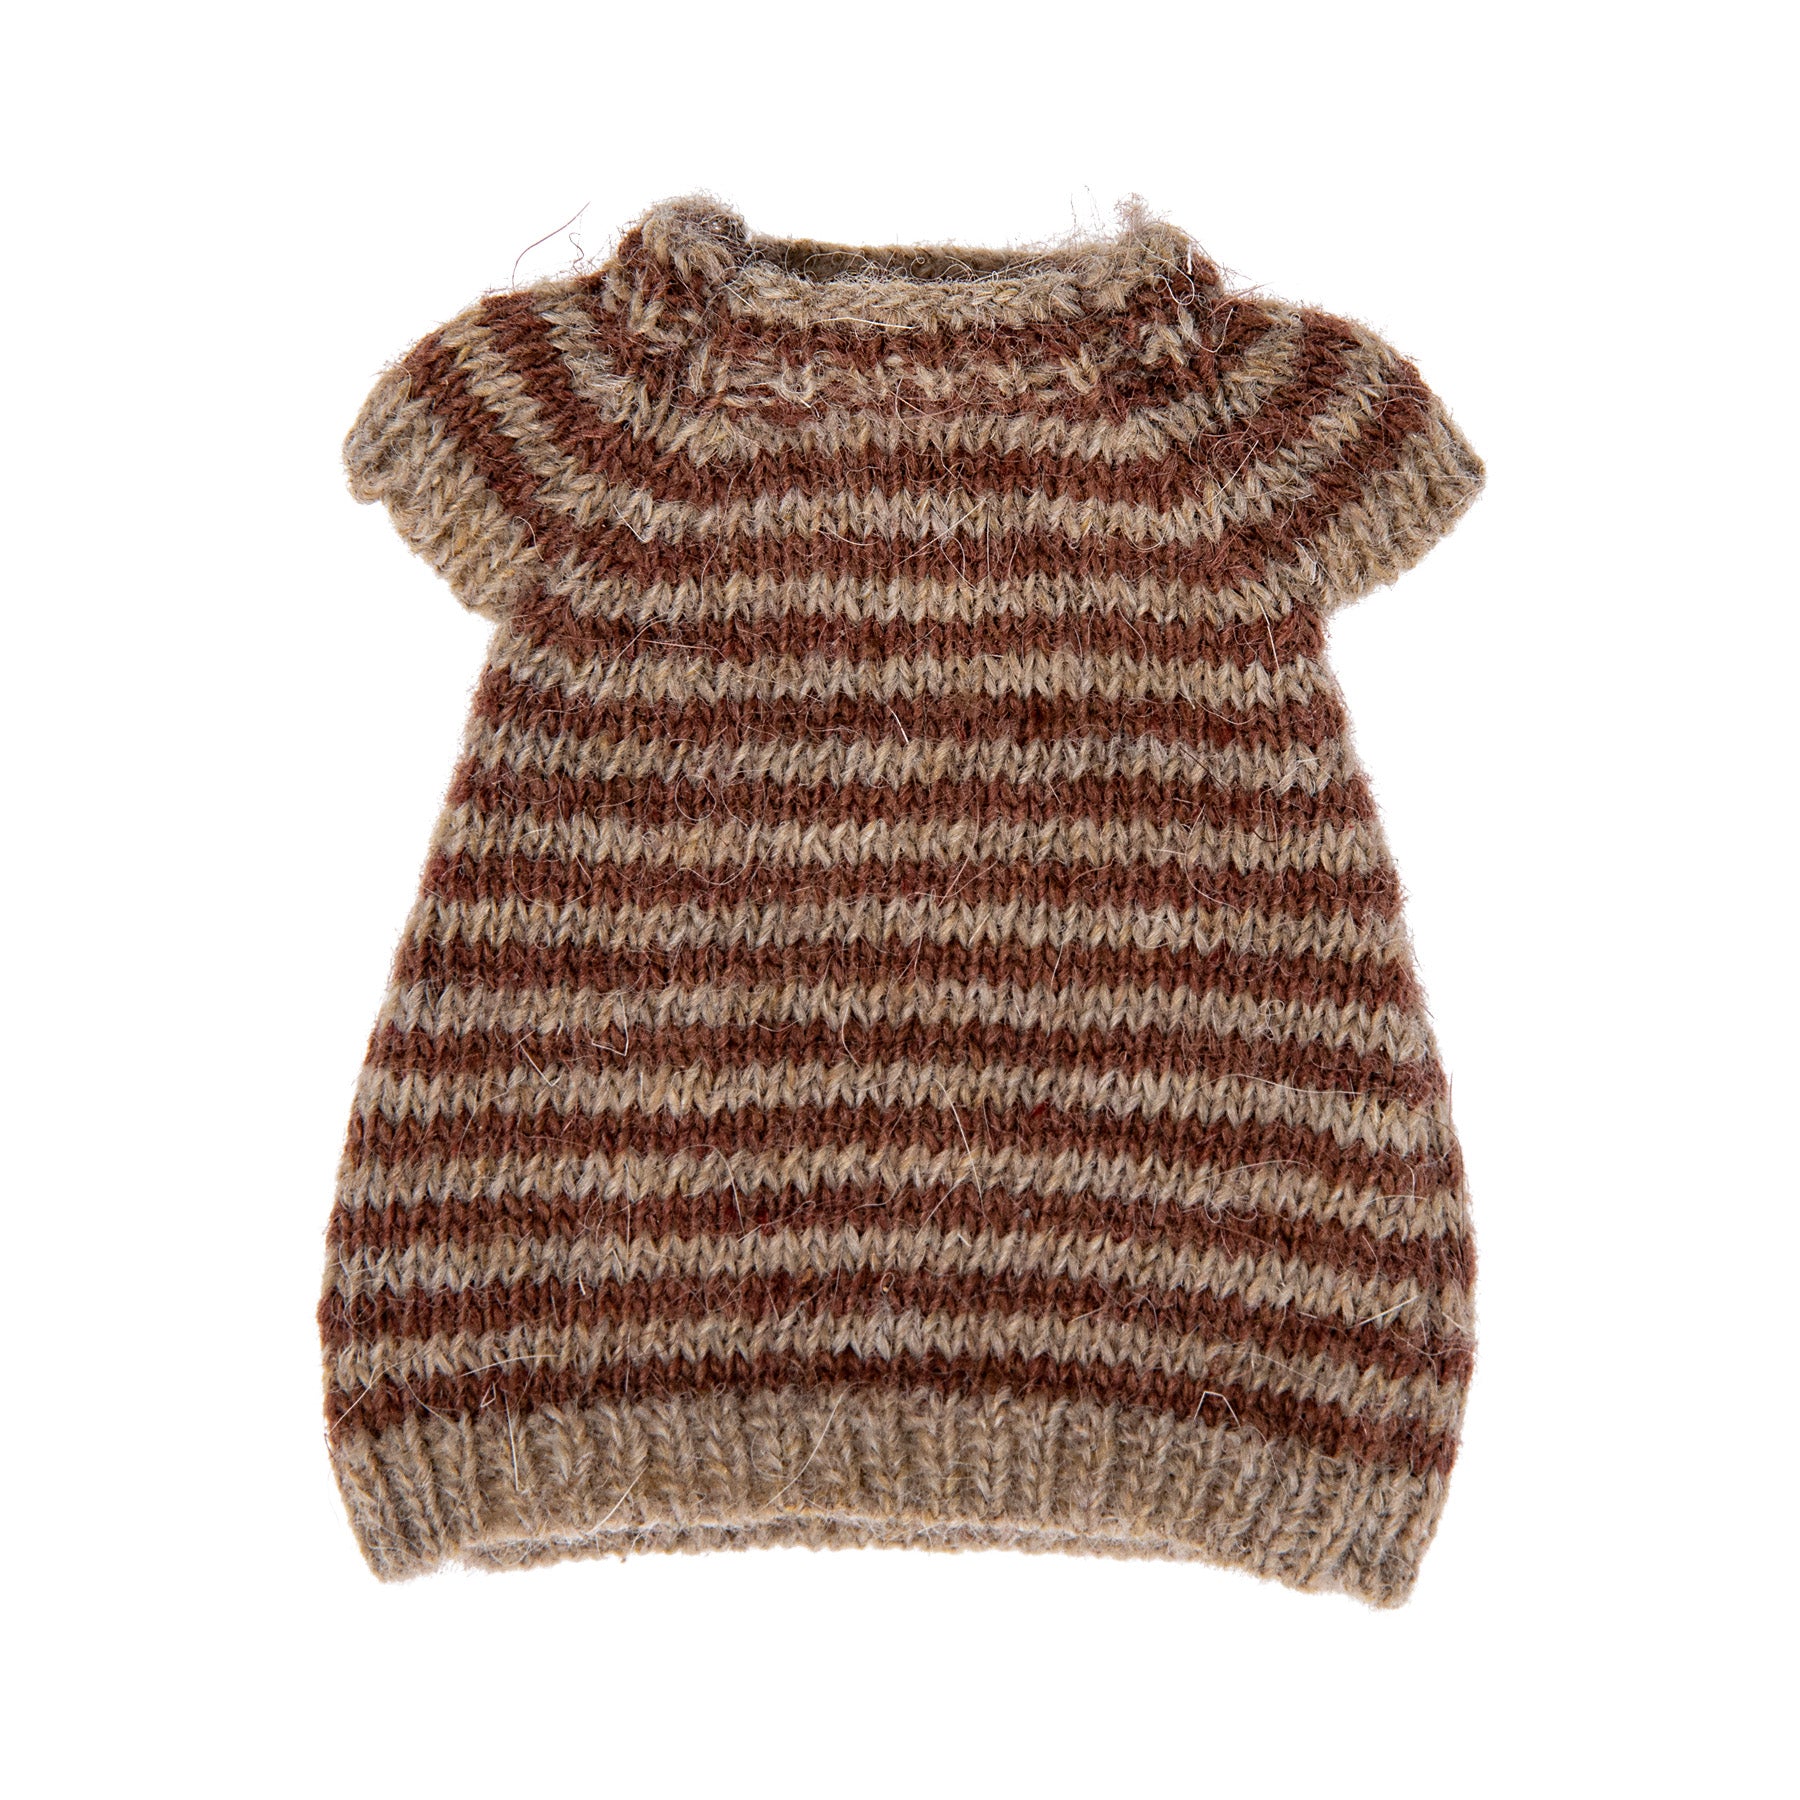 maileg mum mouse knitted dress